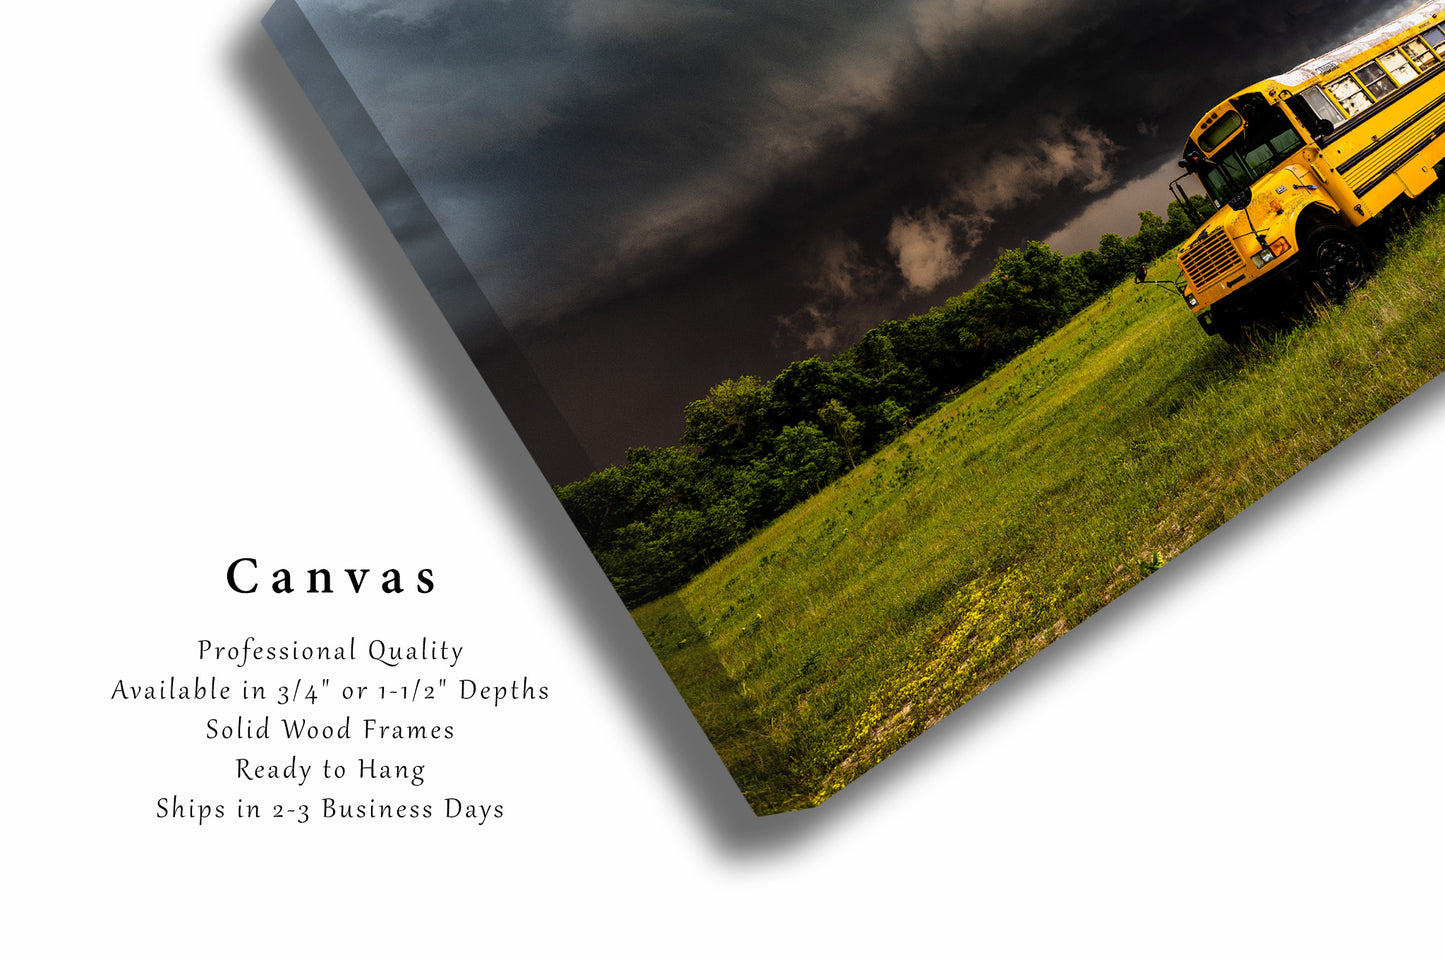 School Bus Canvas | Storm Gallery Wrap | Oklahoma Photography | Thunderstorm Wall Art | Classroom Decor | Ready to Hang